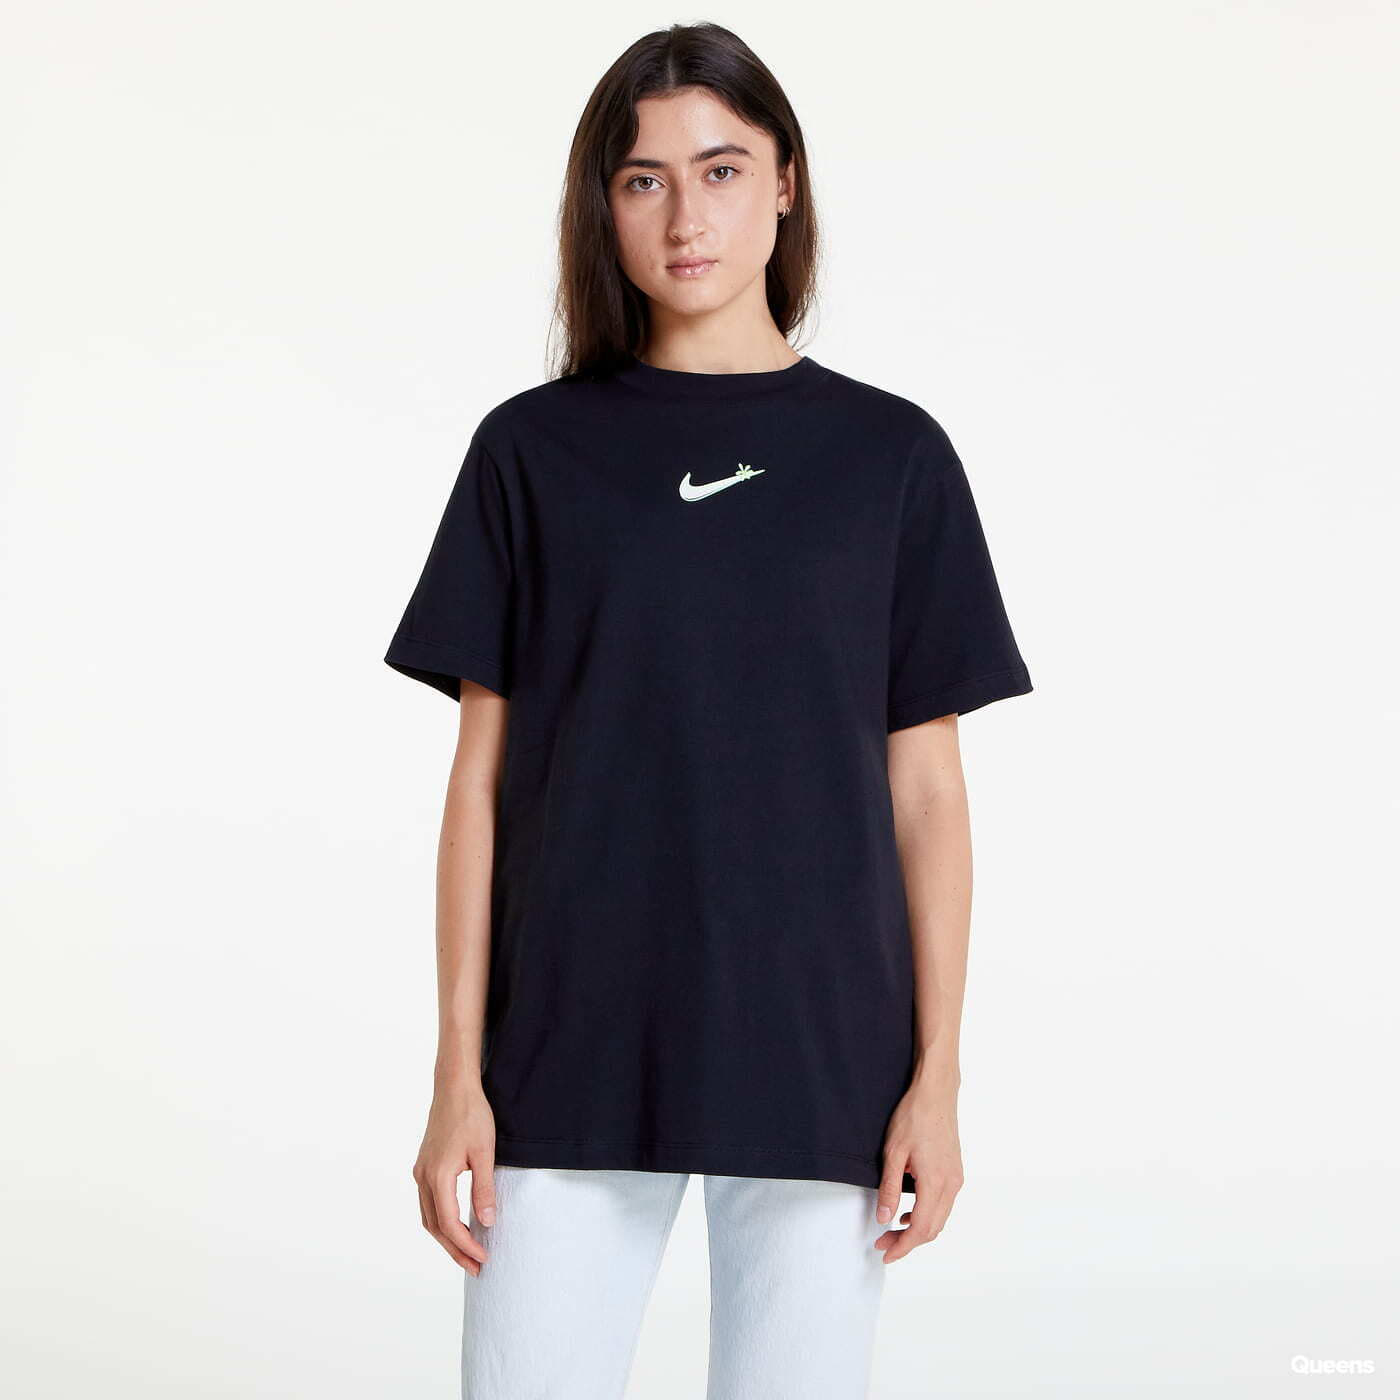 Koszulki Nike Sportswear Women's T-Shirt Černé